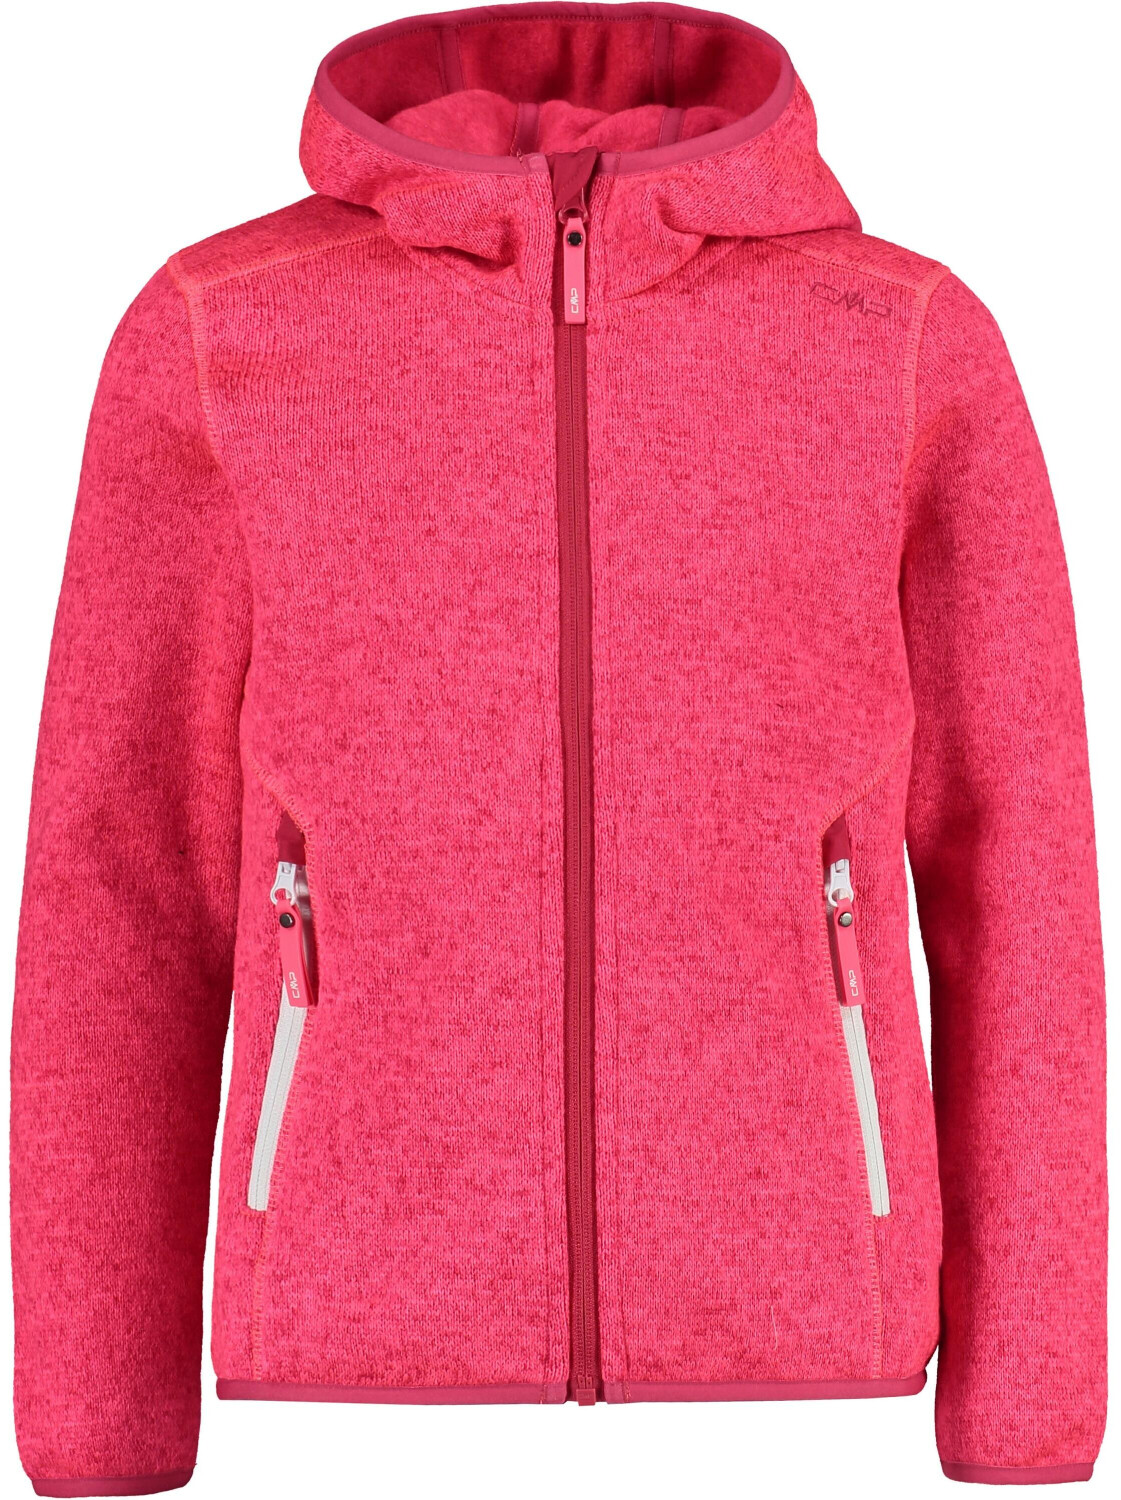 CMP Girl Fleece-Jacket Knit-Tech (3H19825) gloss/fragola ab 17,09 € |  Preisvergleich bei